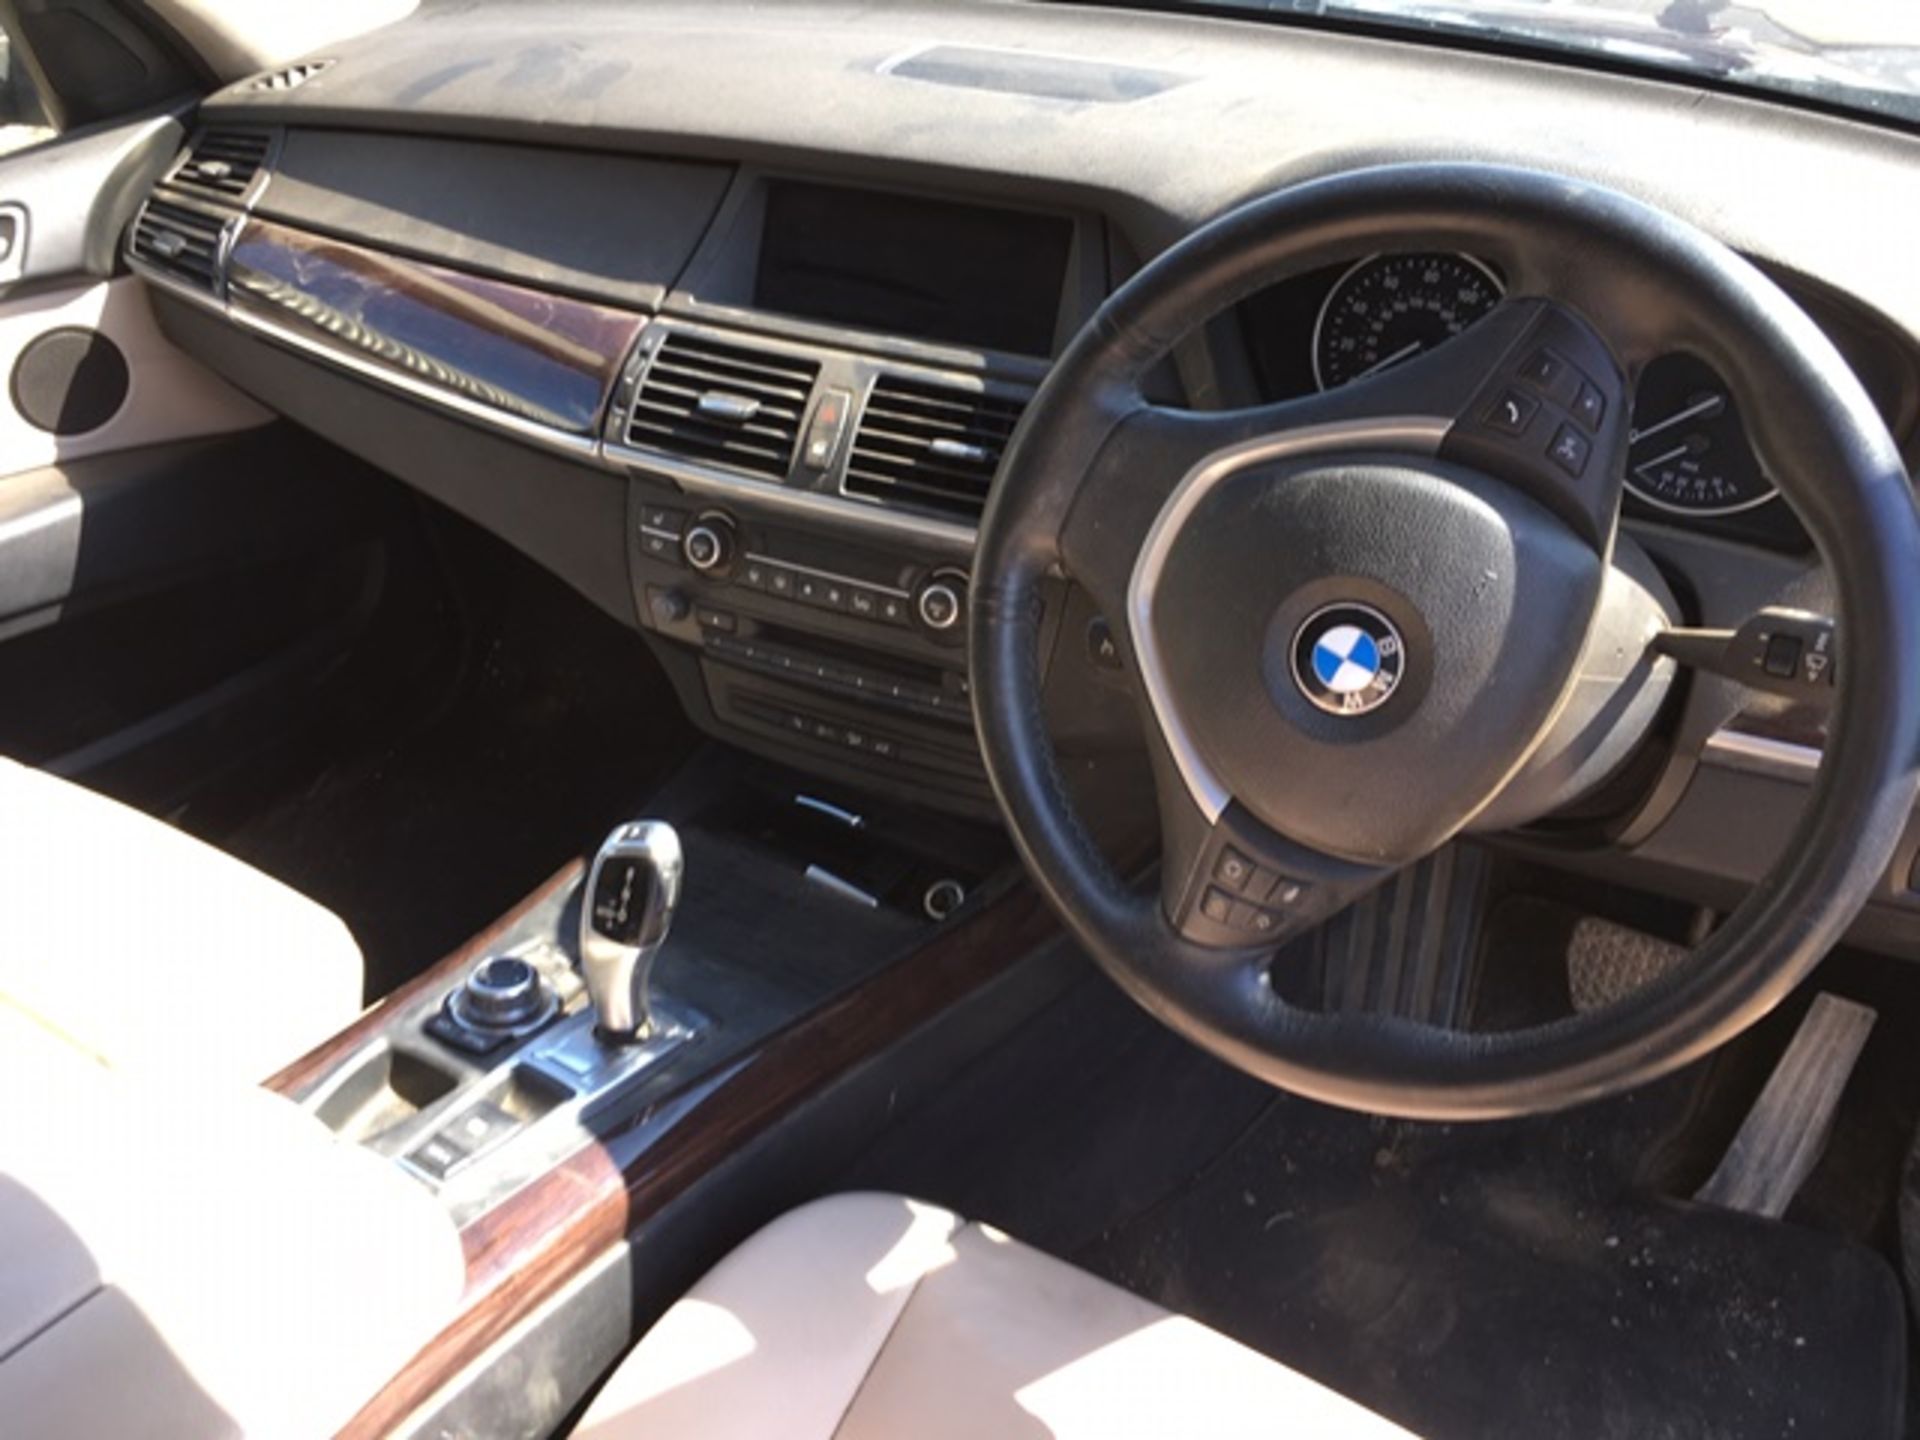 BMW X5 Xdrive 30d Se Auto, 245bhp, Registration: WA60 LBL, Recorded mileage: 66,702 as of 28th Nov - Image 8 of 8